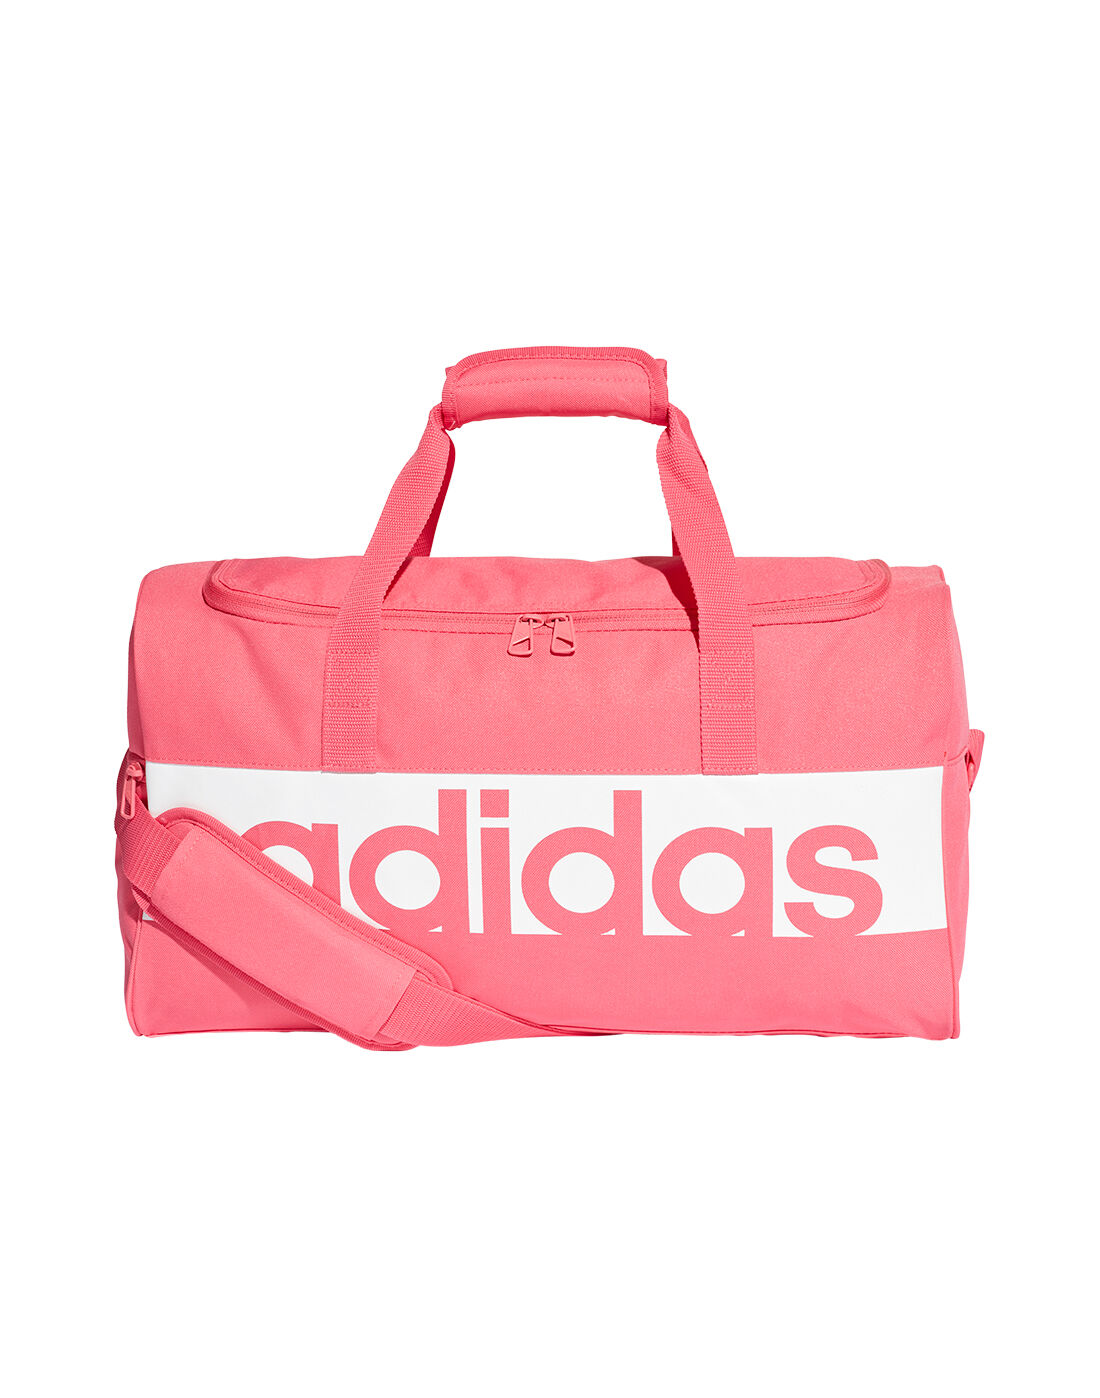 sports bag pink